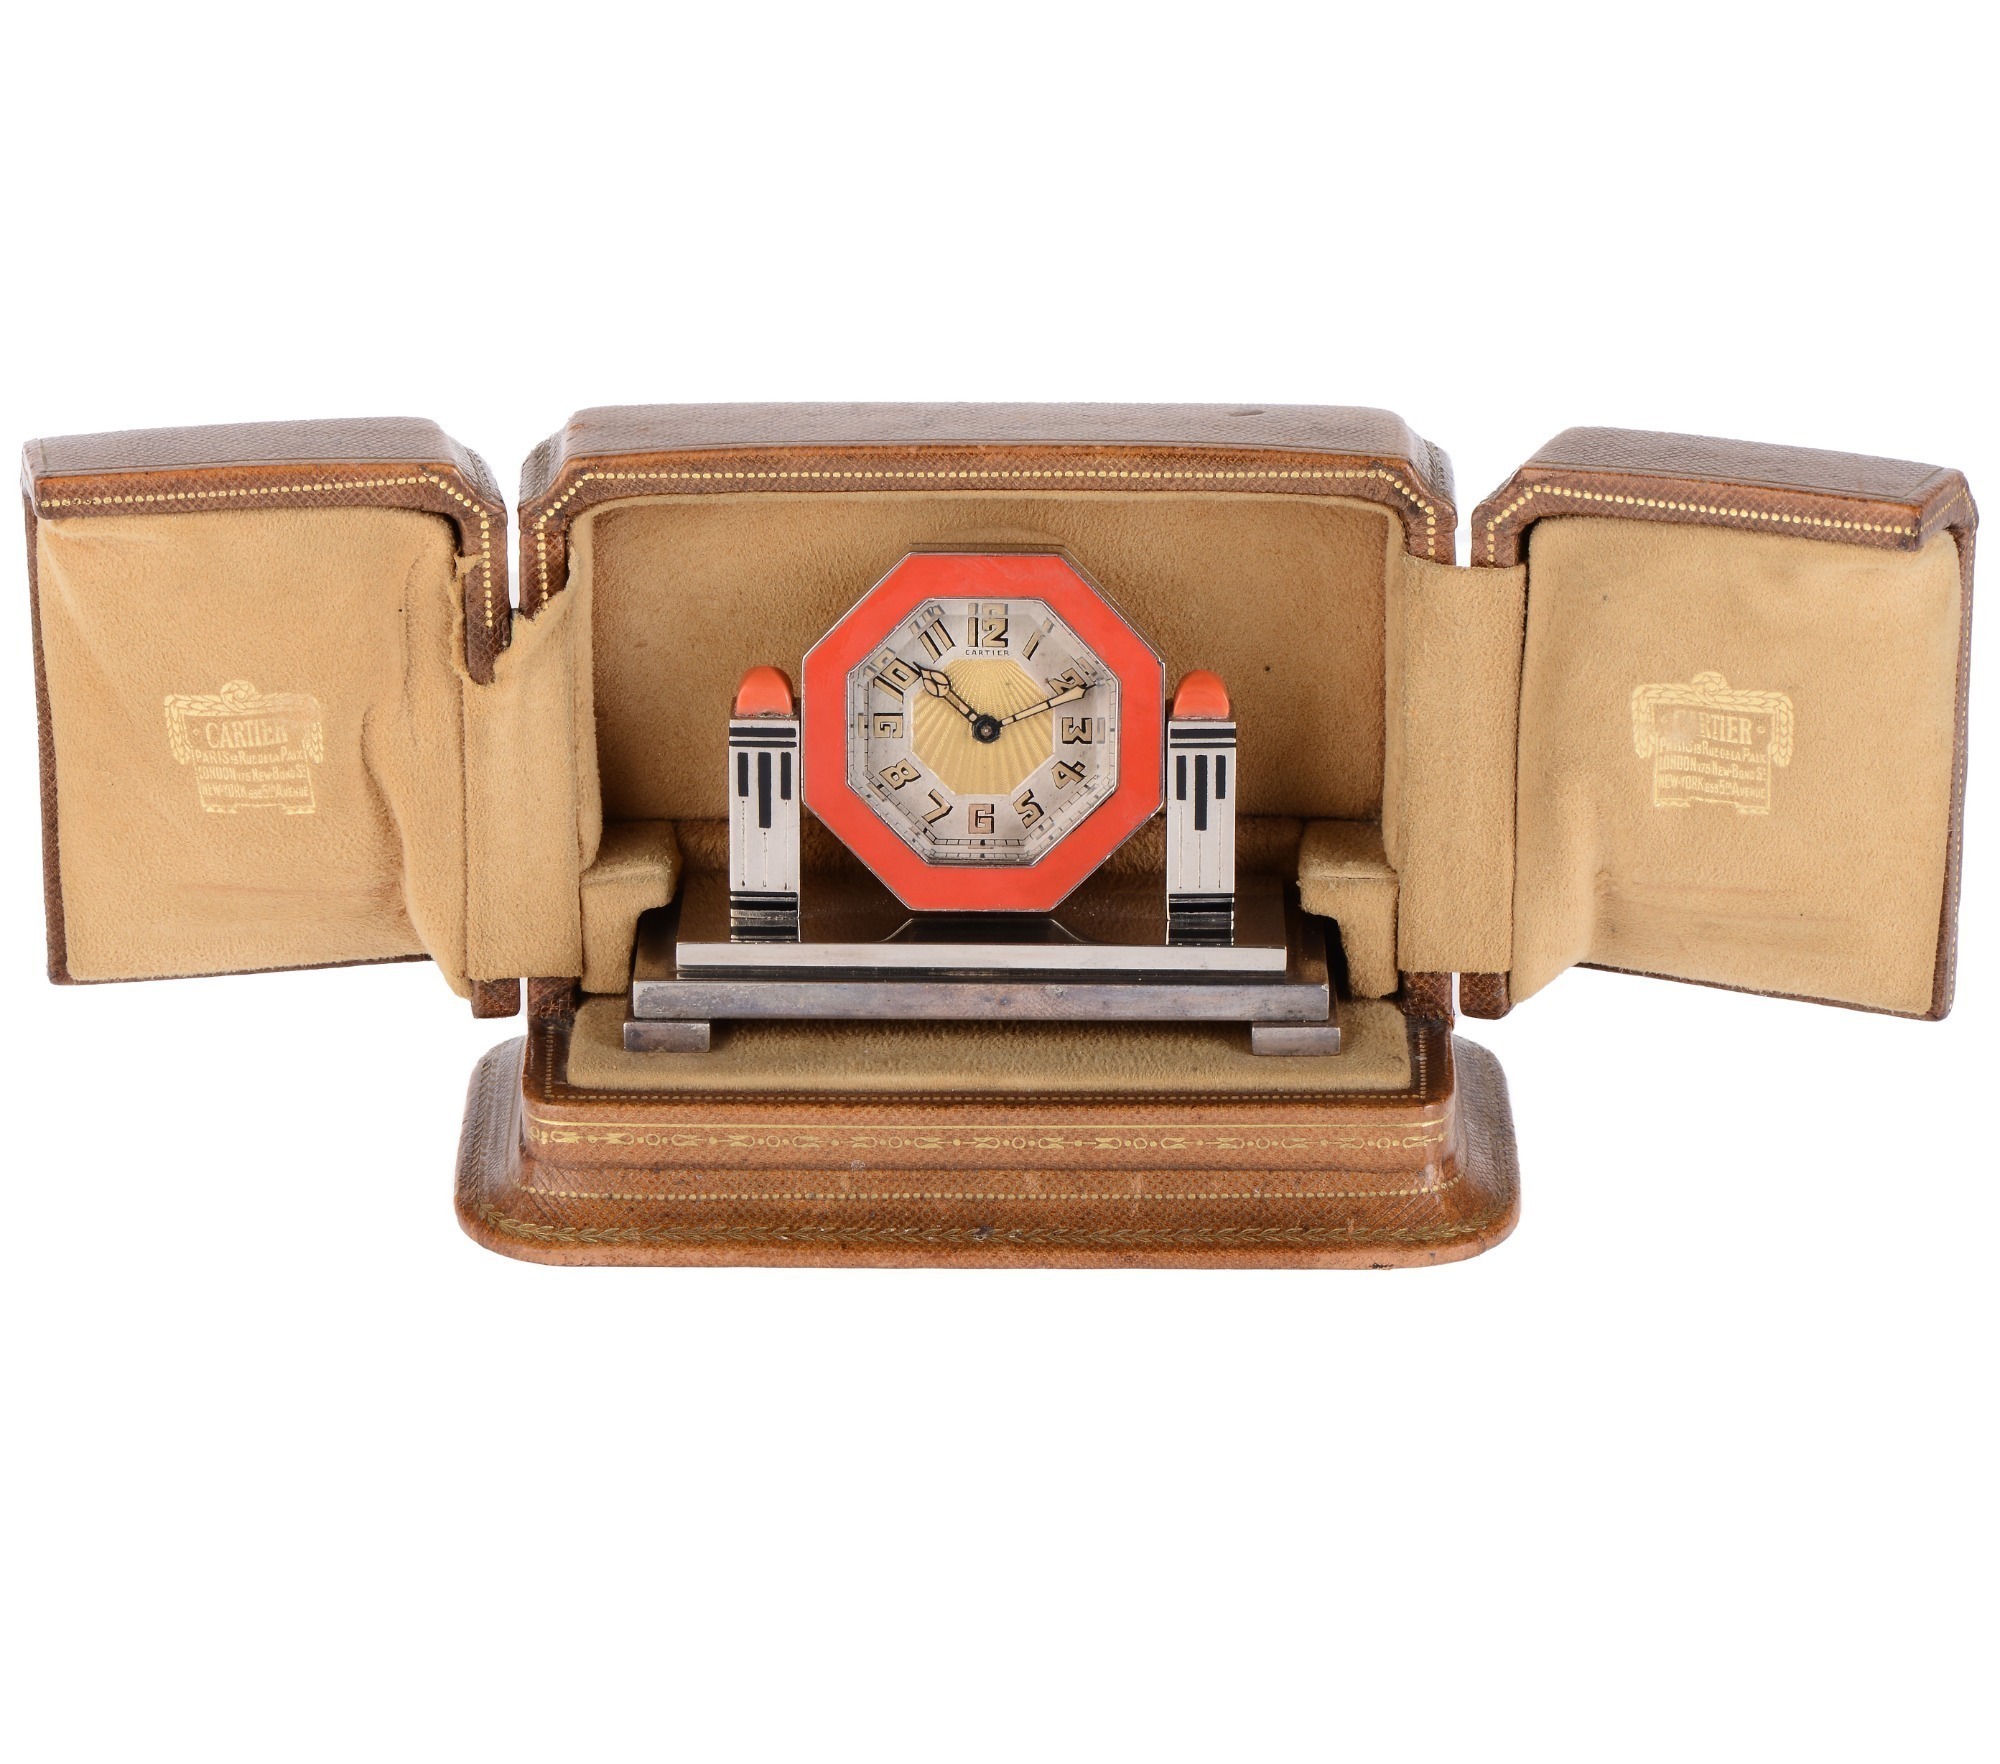 Cartier Art Deco Coral And Enamel Desk Clock With Original Box